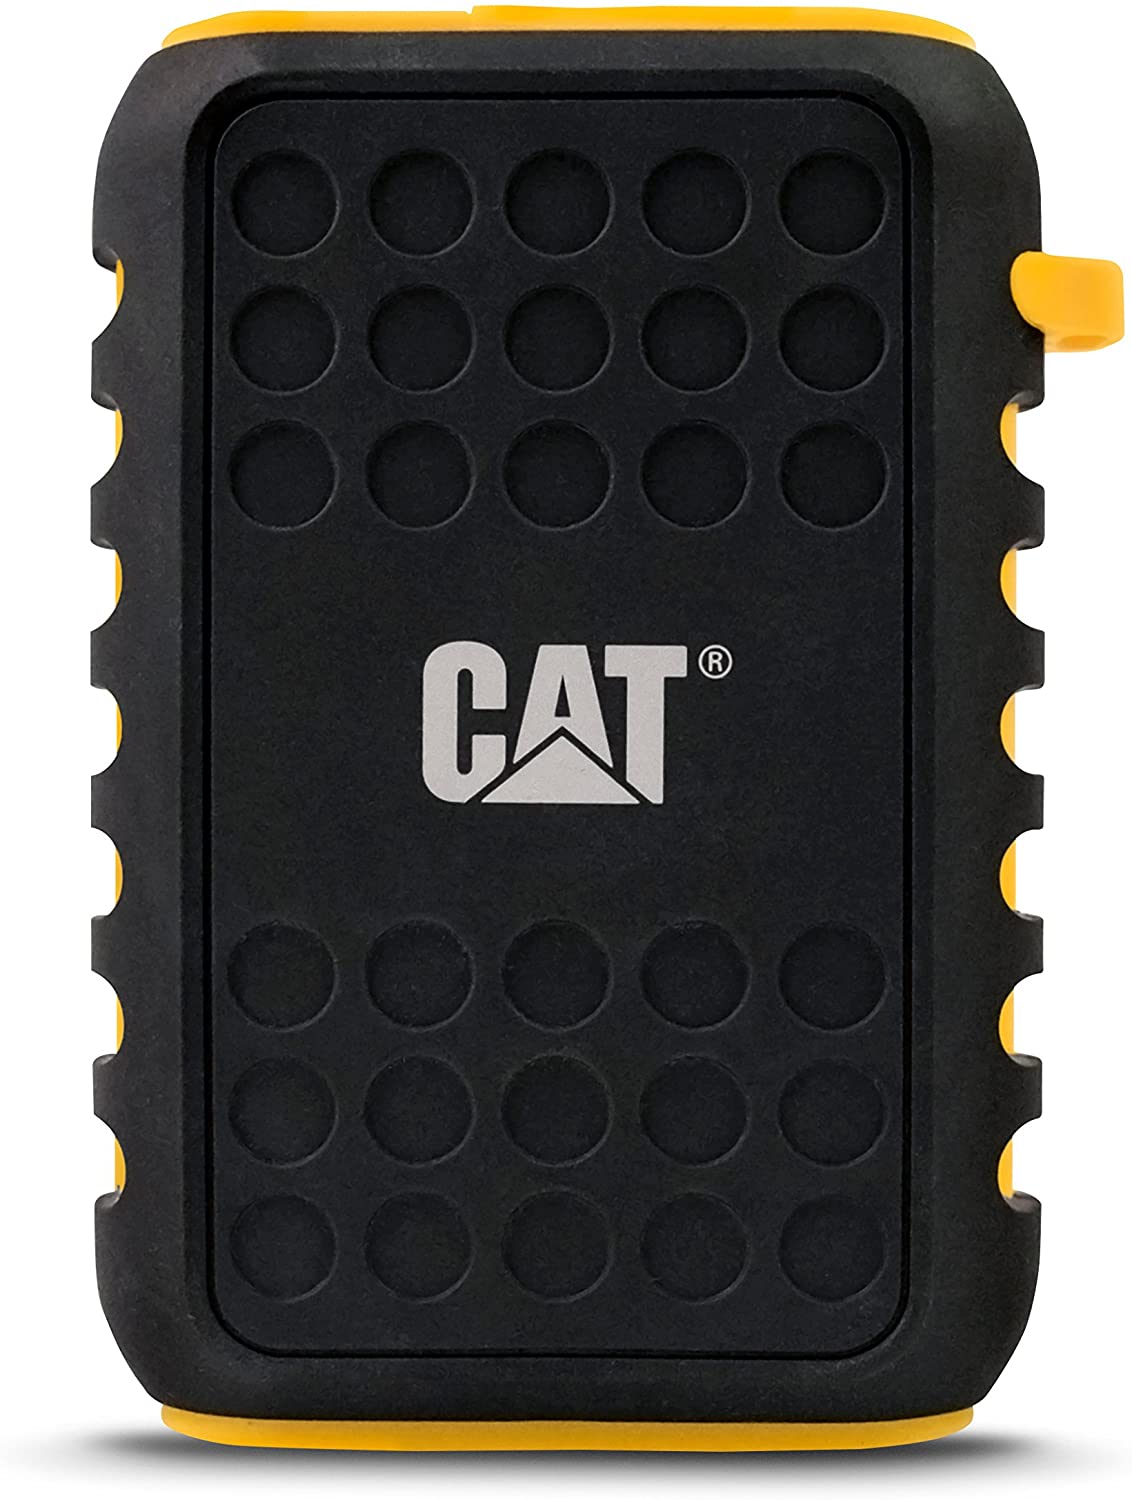 Cargador Portátil Cat Active Urban Powerbank de 10.000 mAh. con Tecnología Militar IP65 - CAT SERVICE PERU S.A.C.